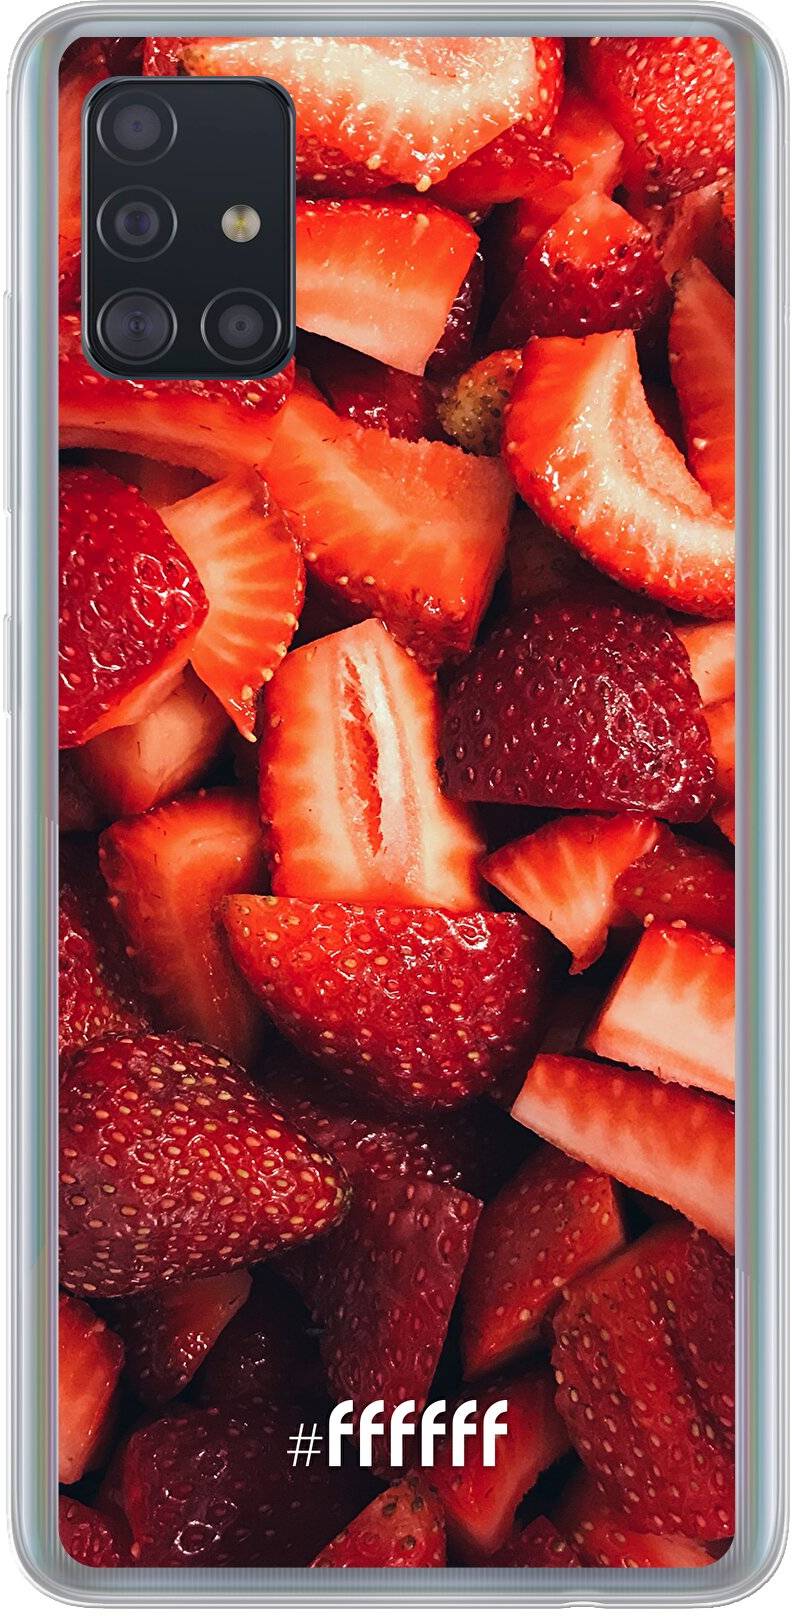 Strawberry Fields Galaxy A51